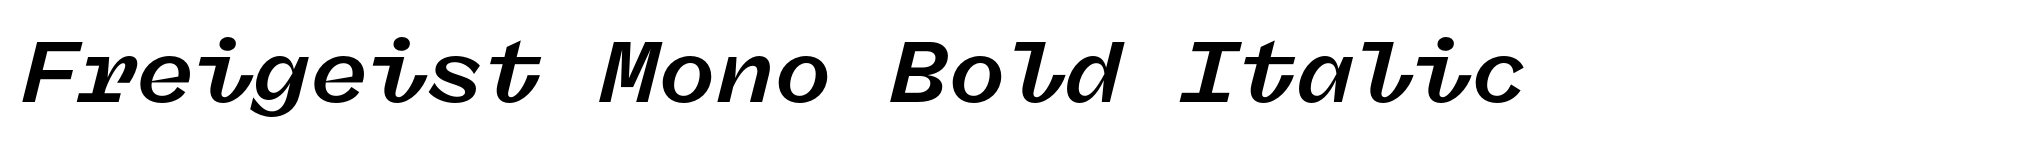 Freigeist Mono Bold Italic image